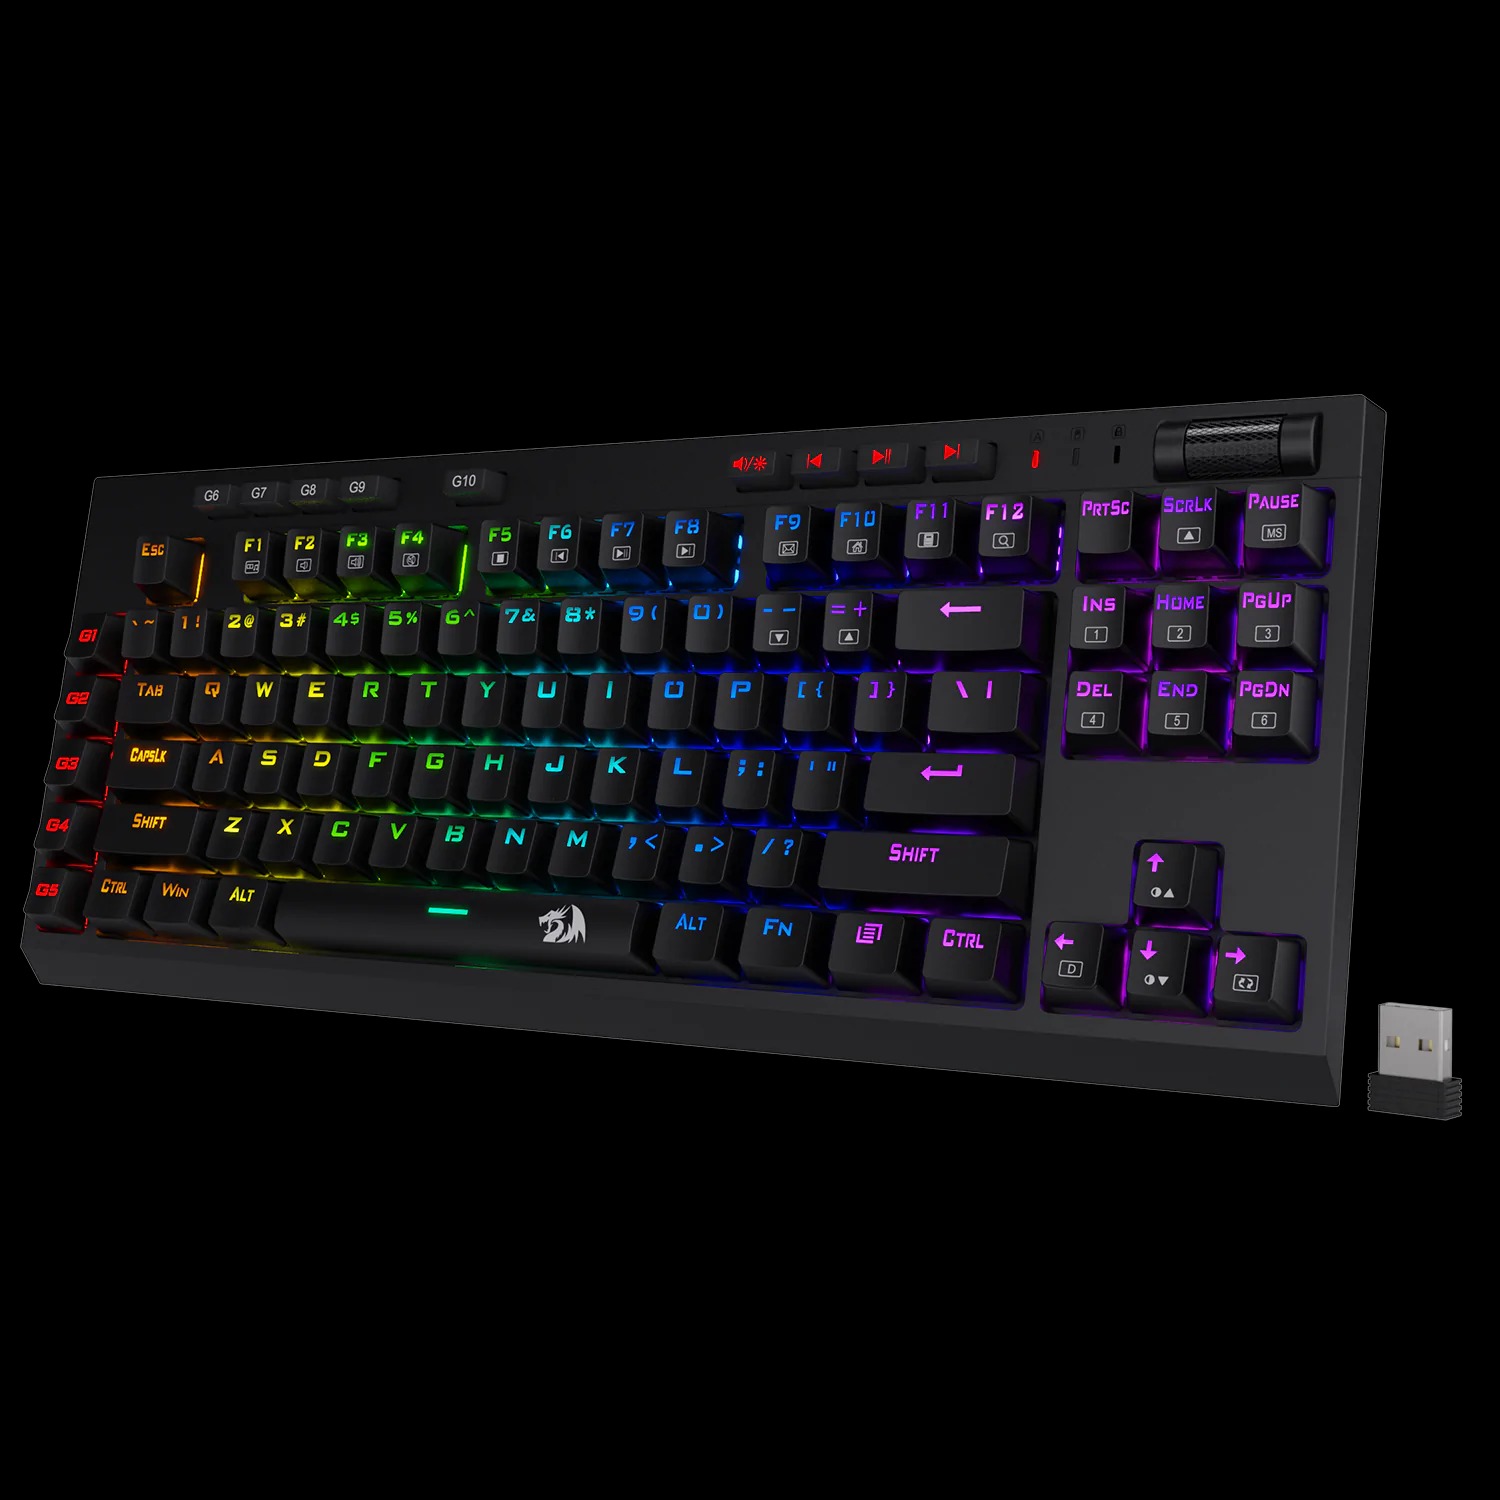 Redragon K596 - Most engrossing ultra-budget wi-fi gaming keyboard